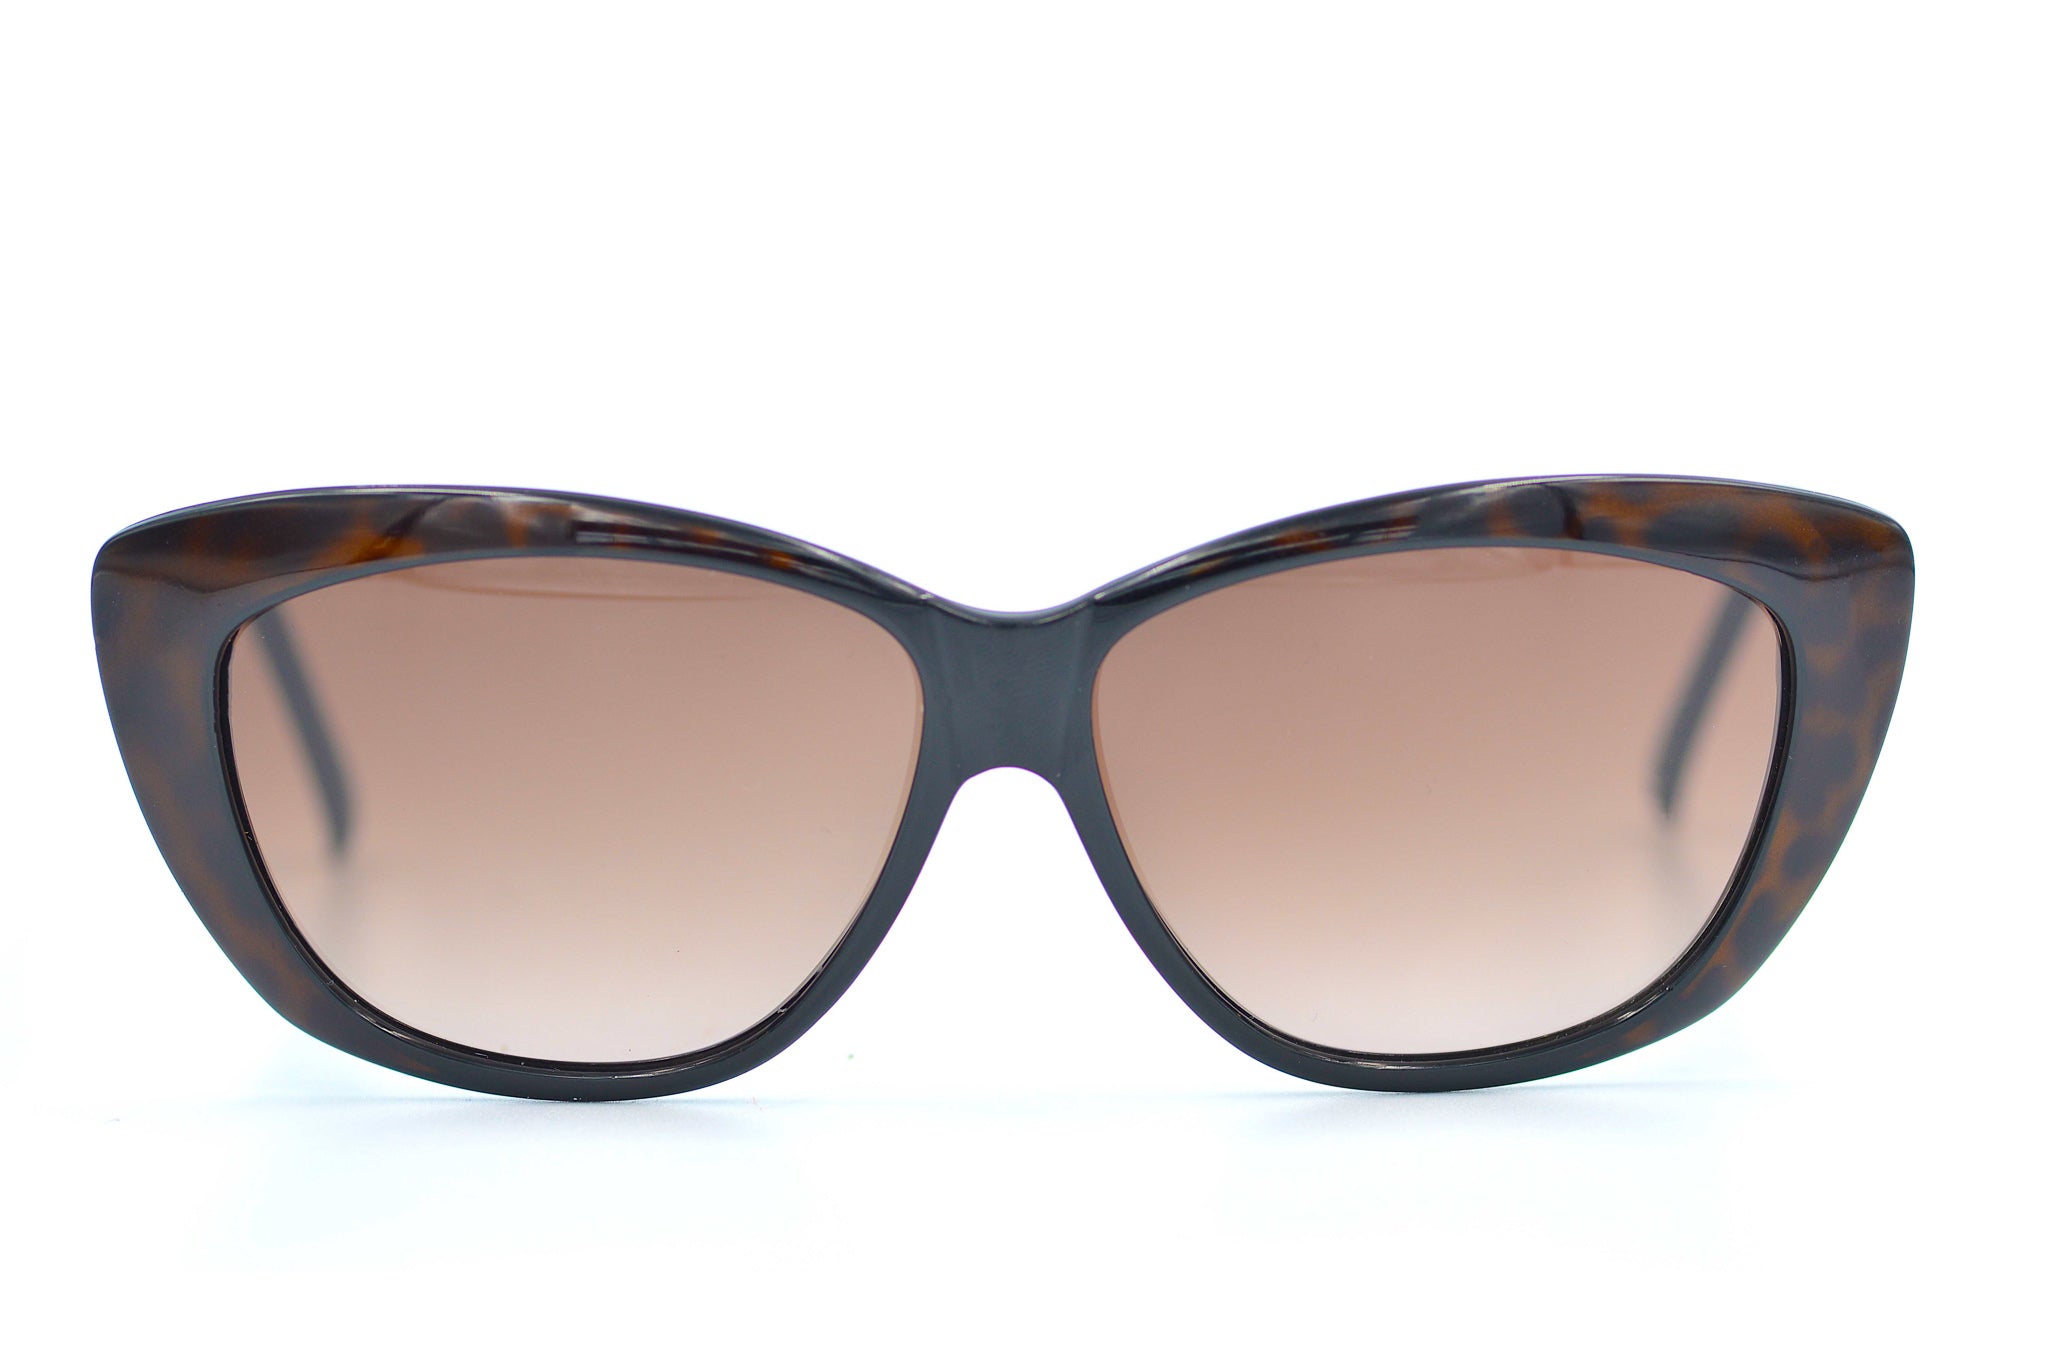 Piave 448 vintage cat eye sunglasses. Piave sunglasses. Italian Vintage Sunglasses. Stylish vintage sunglasses.